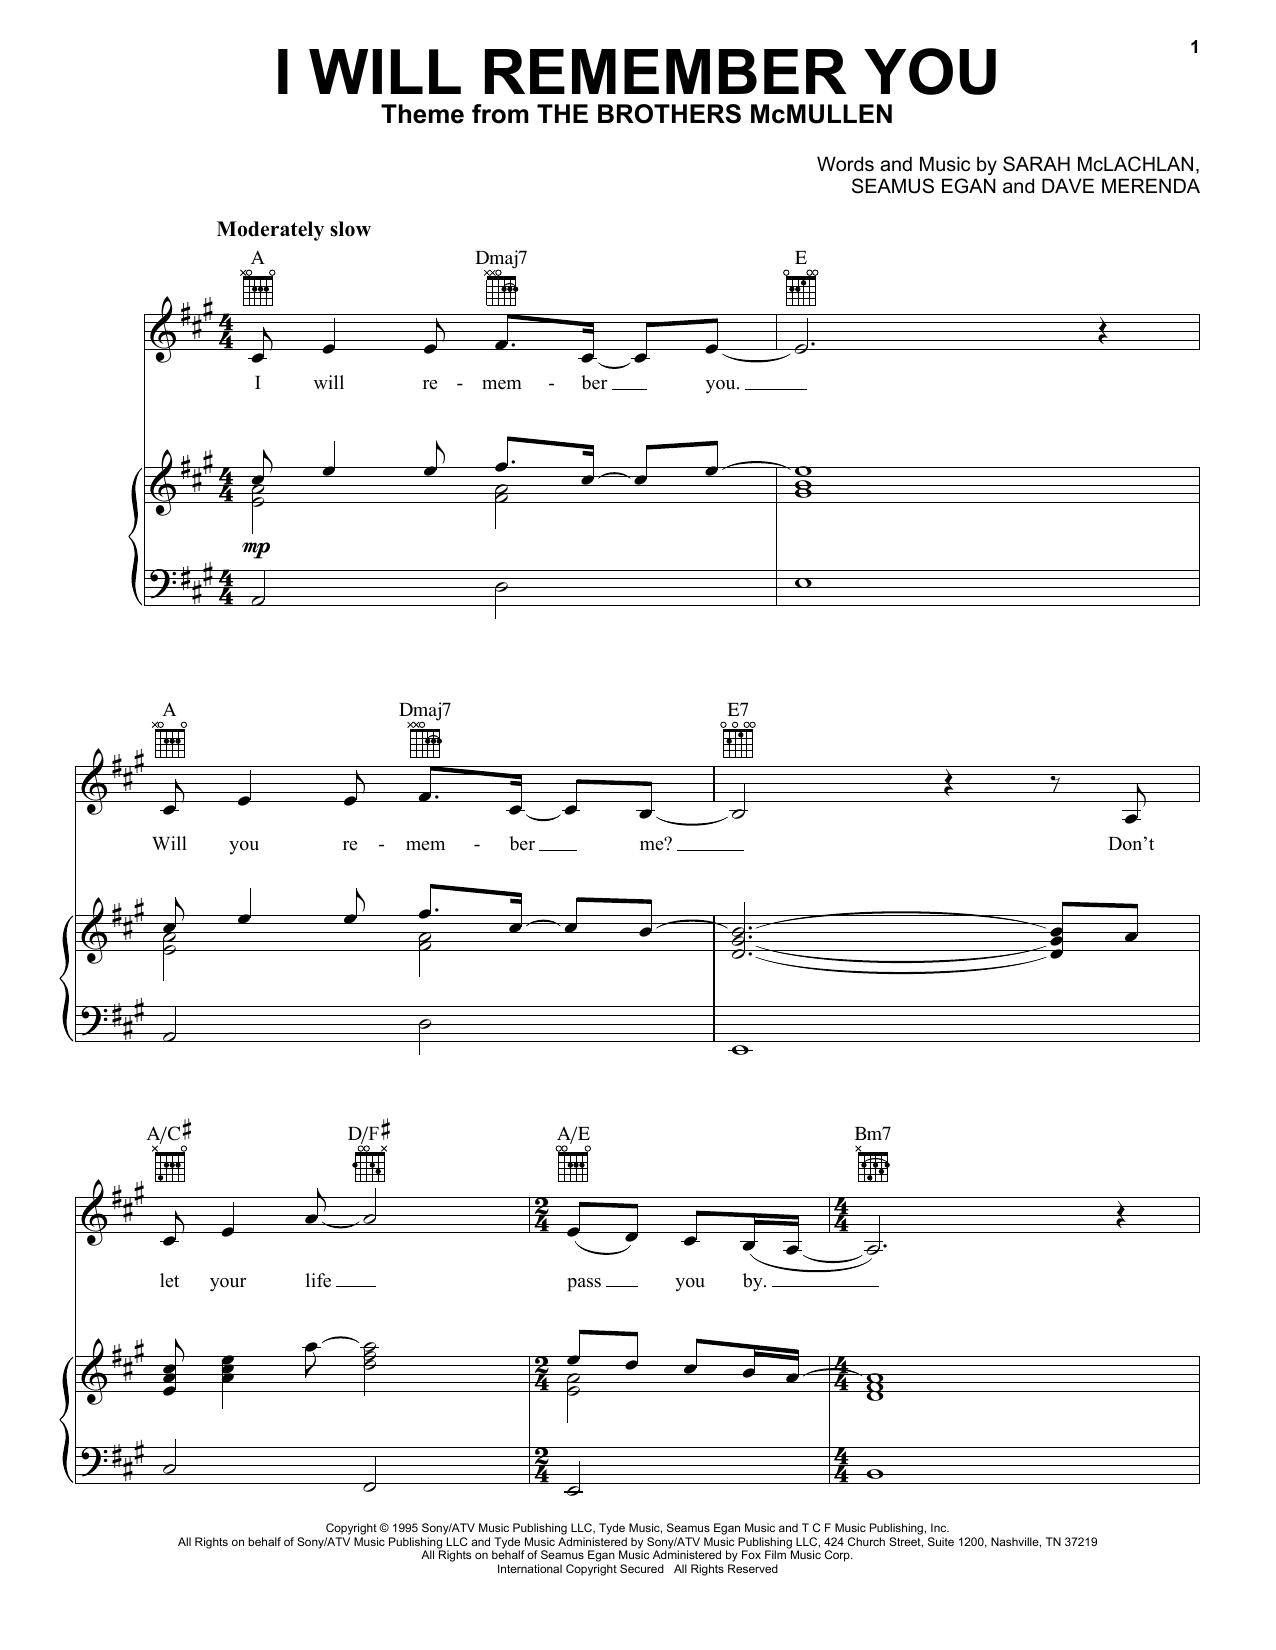 Sarah McLachlan I Will Remember You sheet music notes printable PDF score